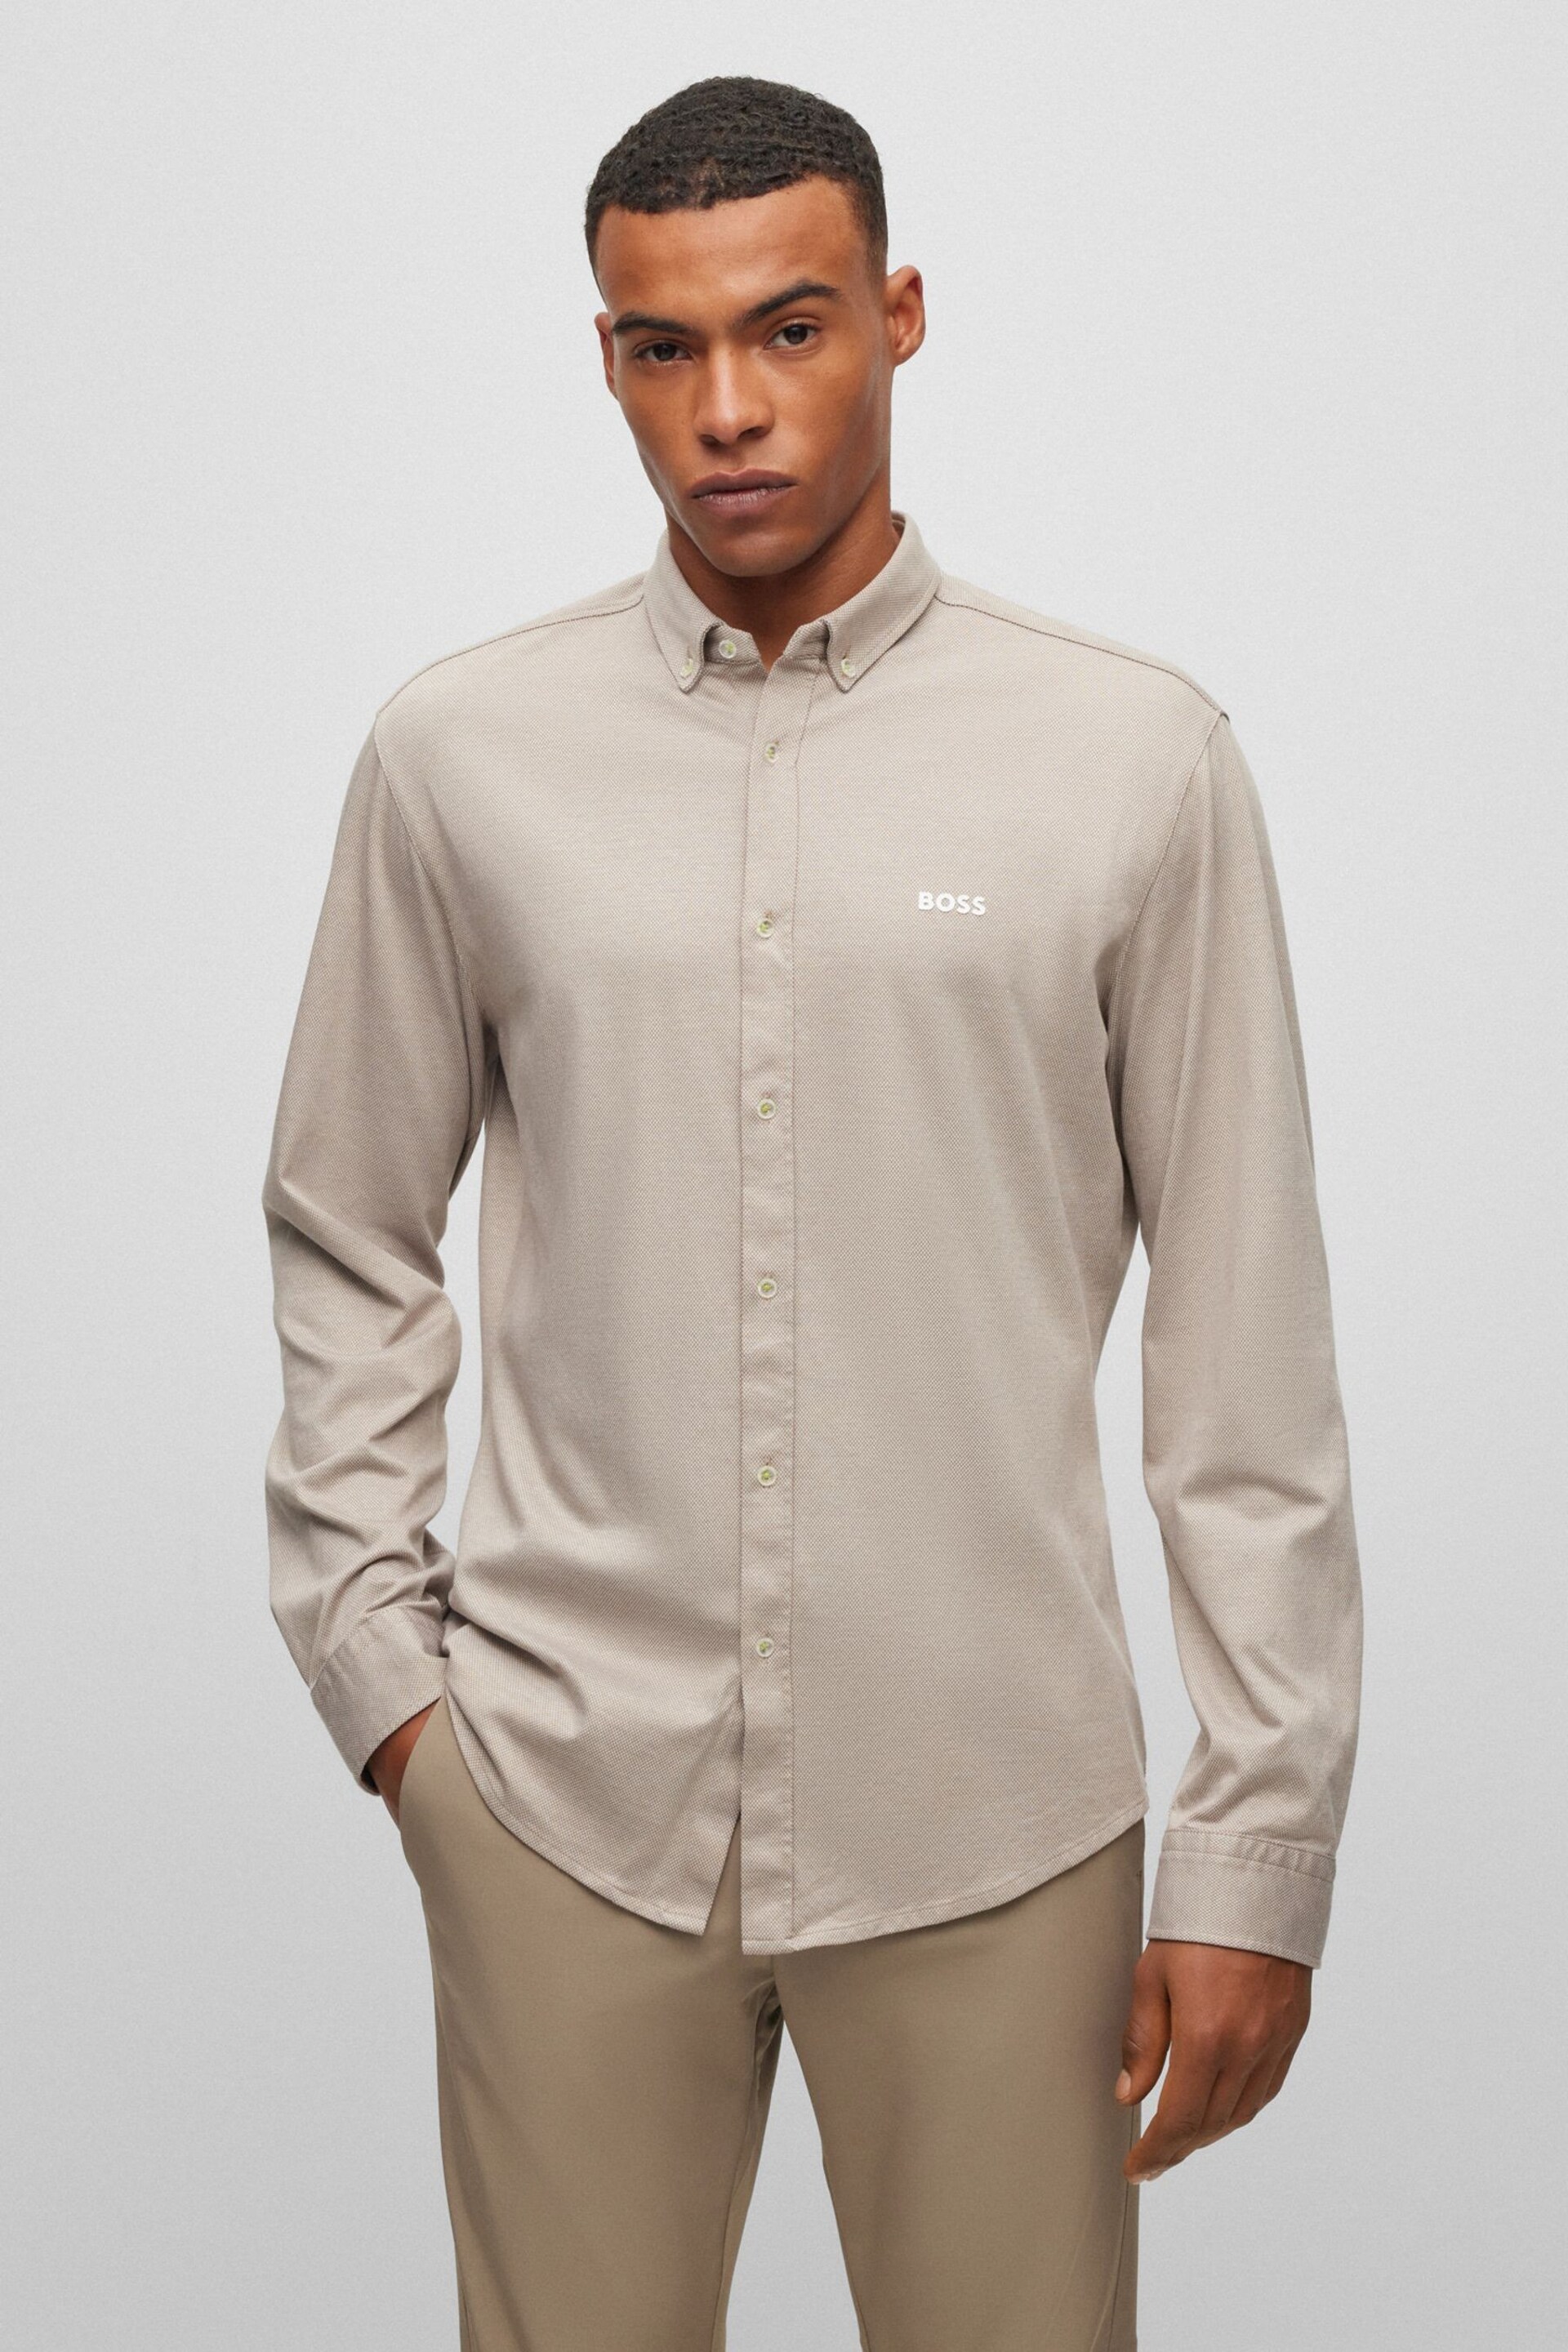 BOSS Beige Biado Long Sleeve Jersey Shirt - Image 1 of 6